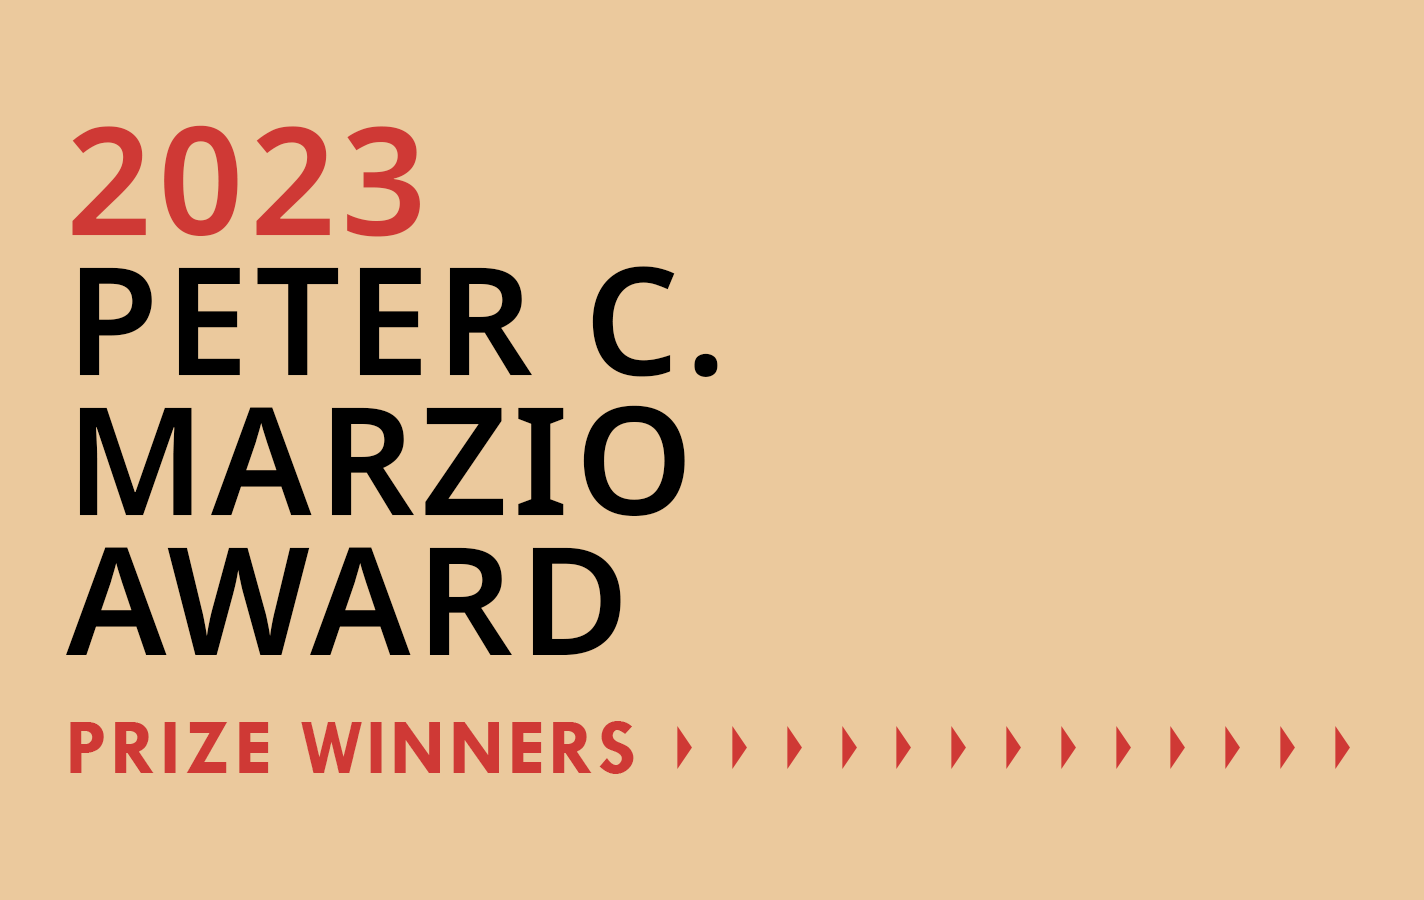 <p><strong>Anuncio de Ganadores (ensayo) del Premio Peter. C Mario 2023</strong></p>
